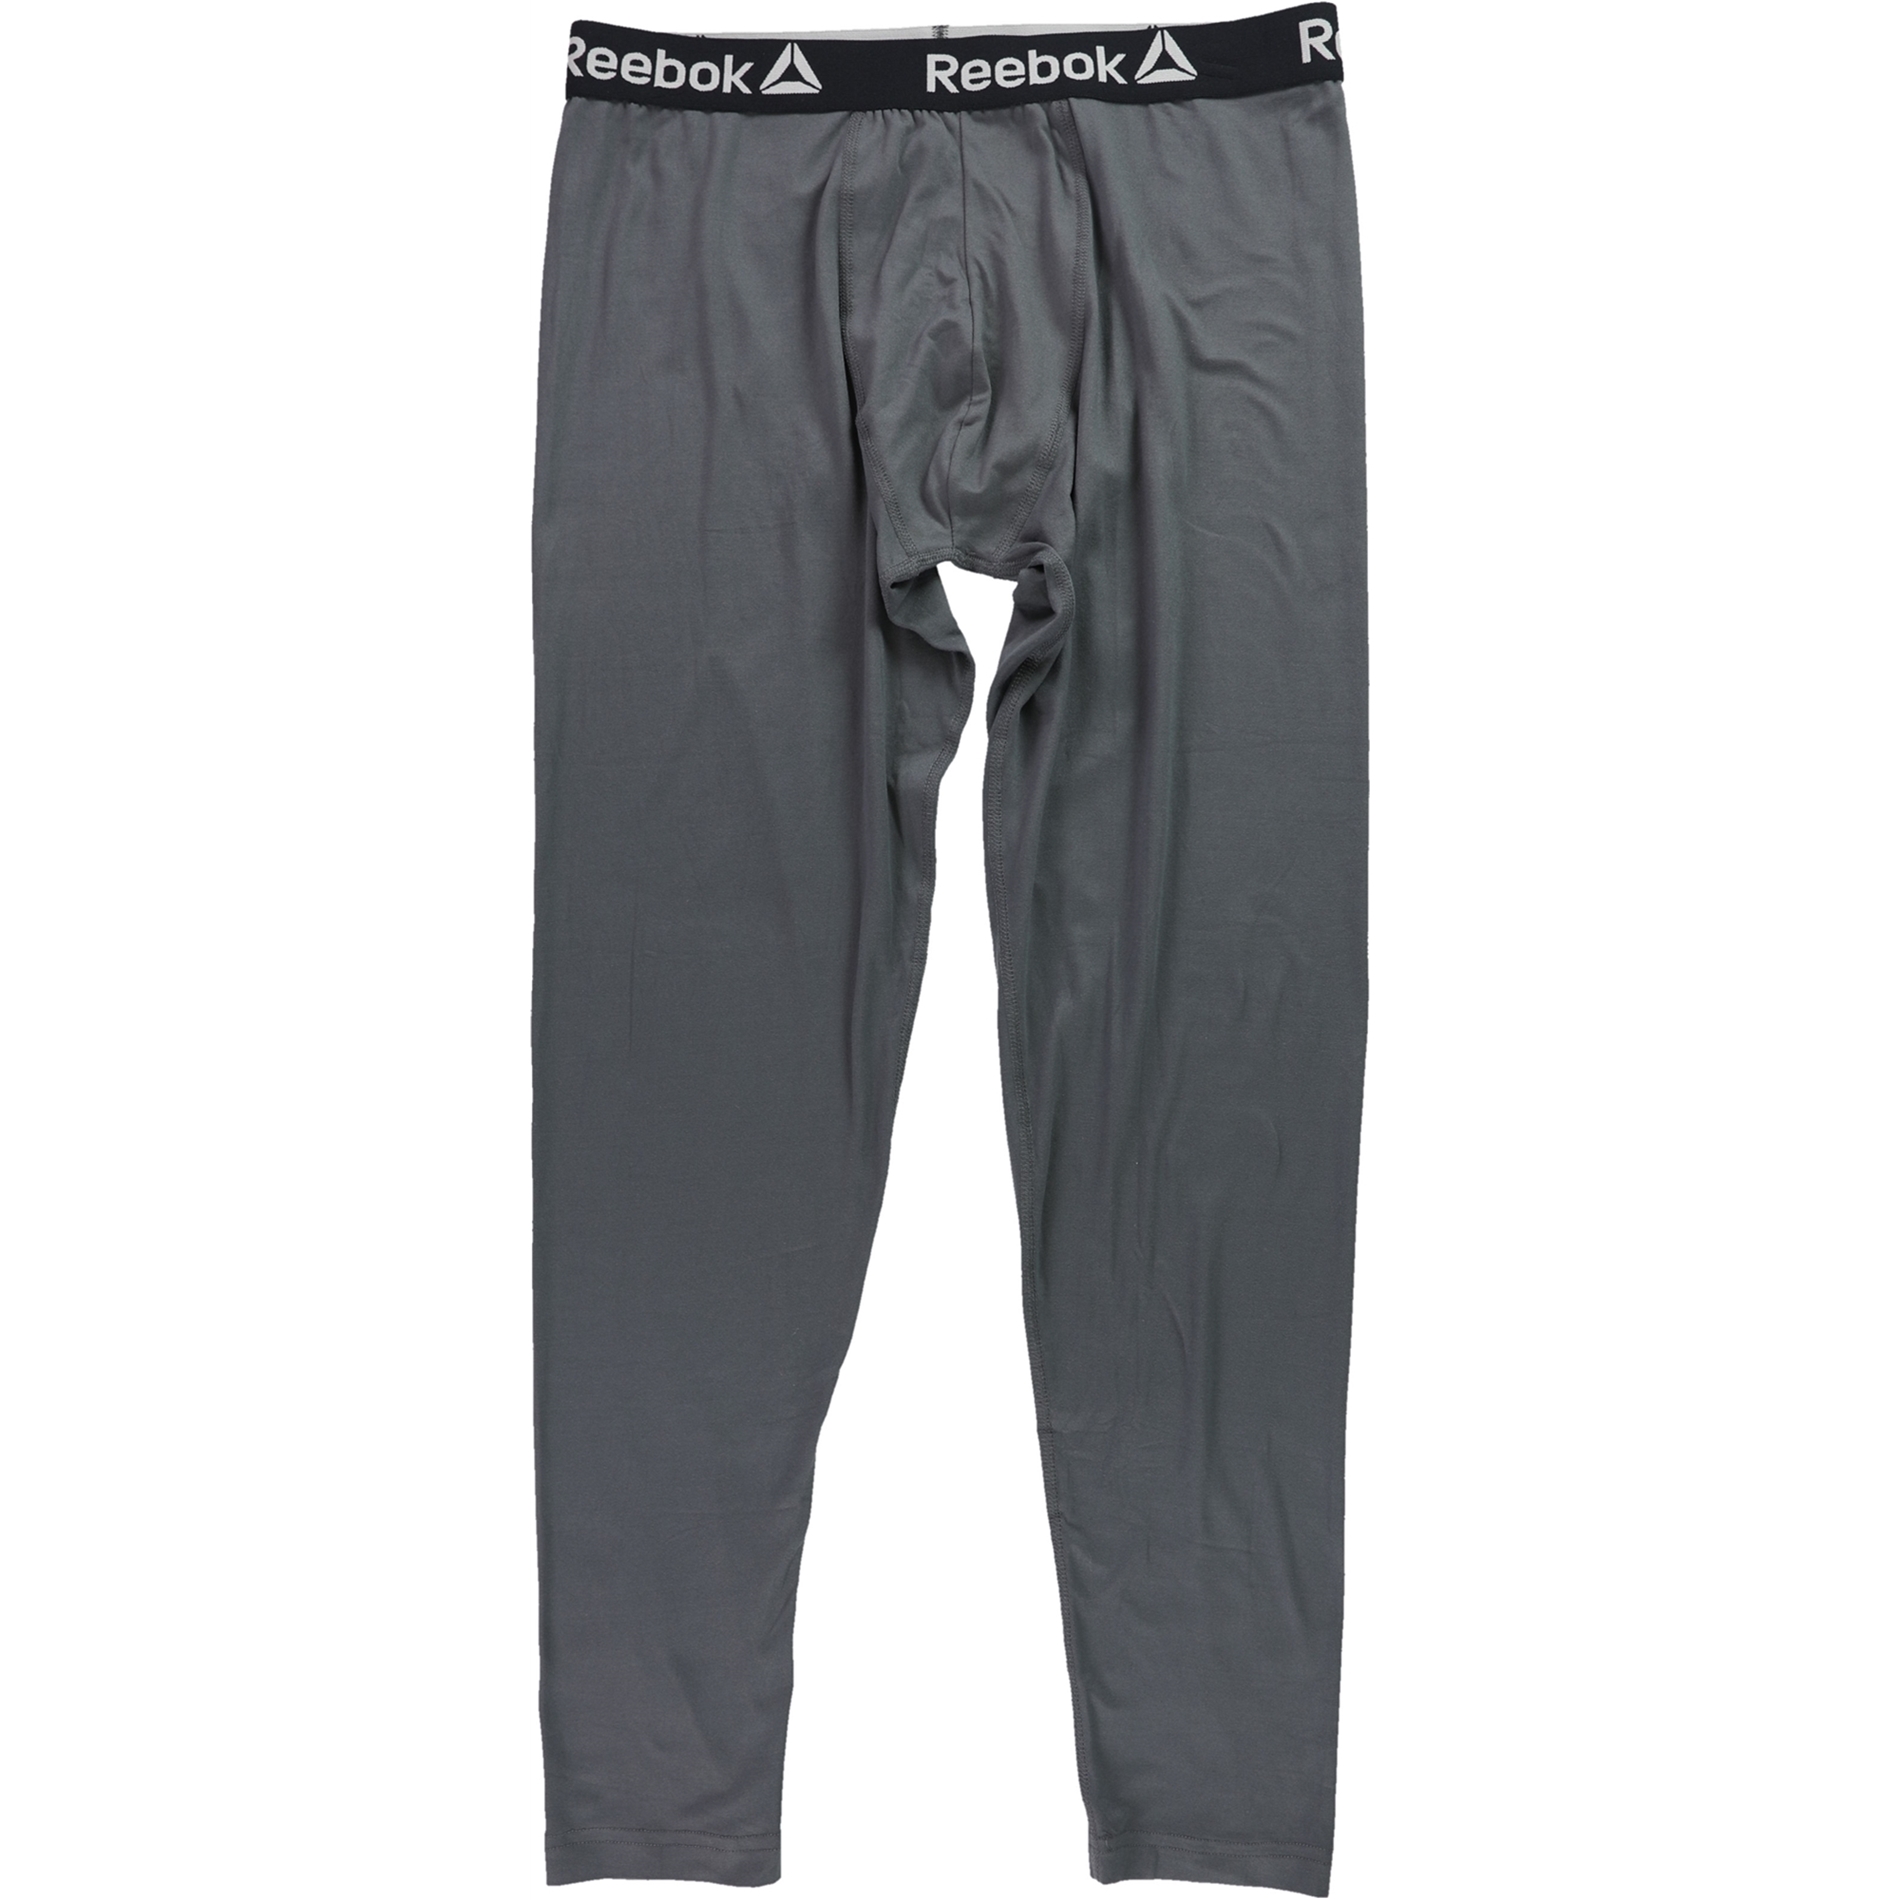 Reebok Mens Perfomance Underwear Base Layer Athletic Pants